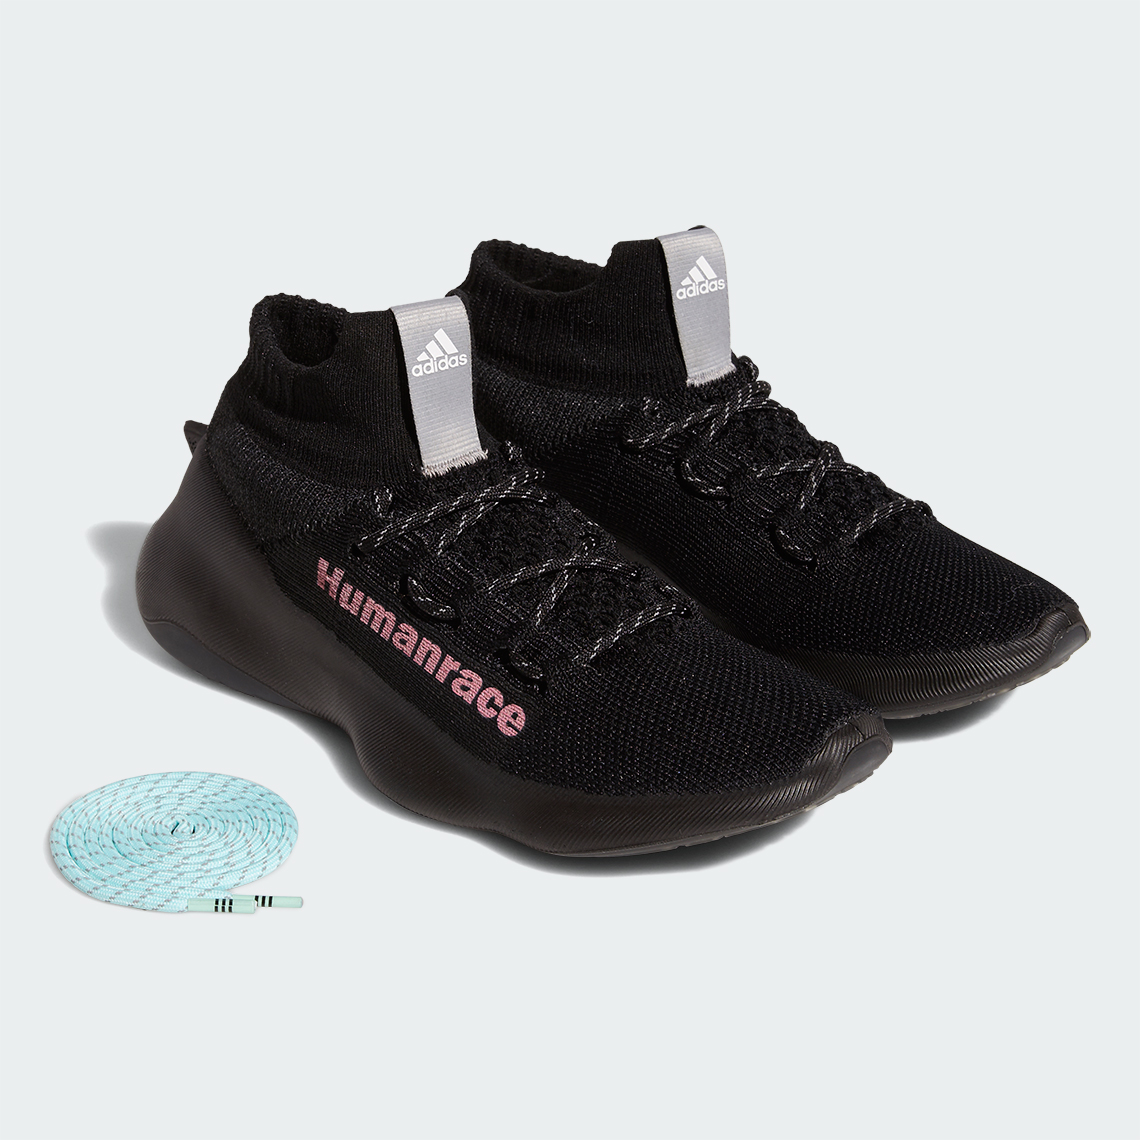 Pharrell Adidas Human Race Sichona Black Pink Gx3032 Release Date 6